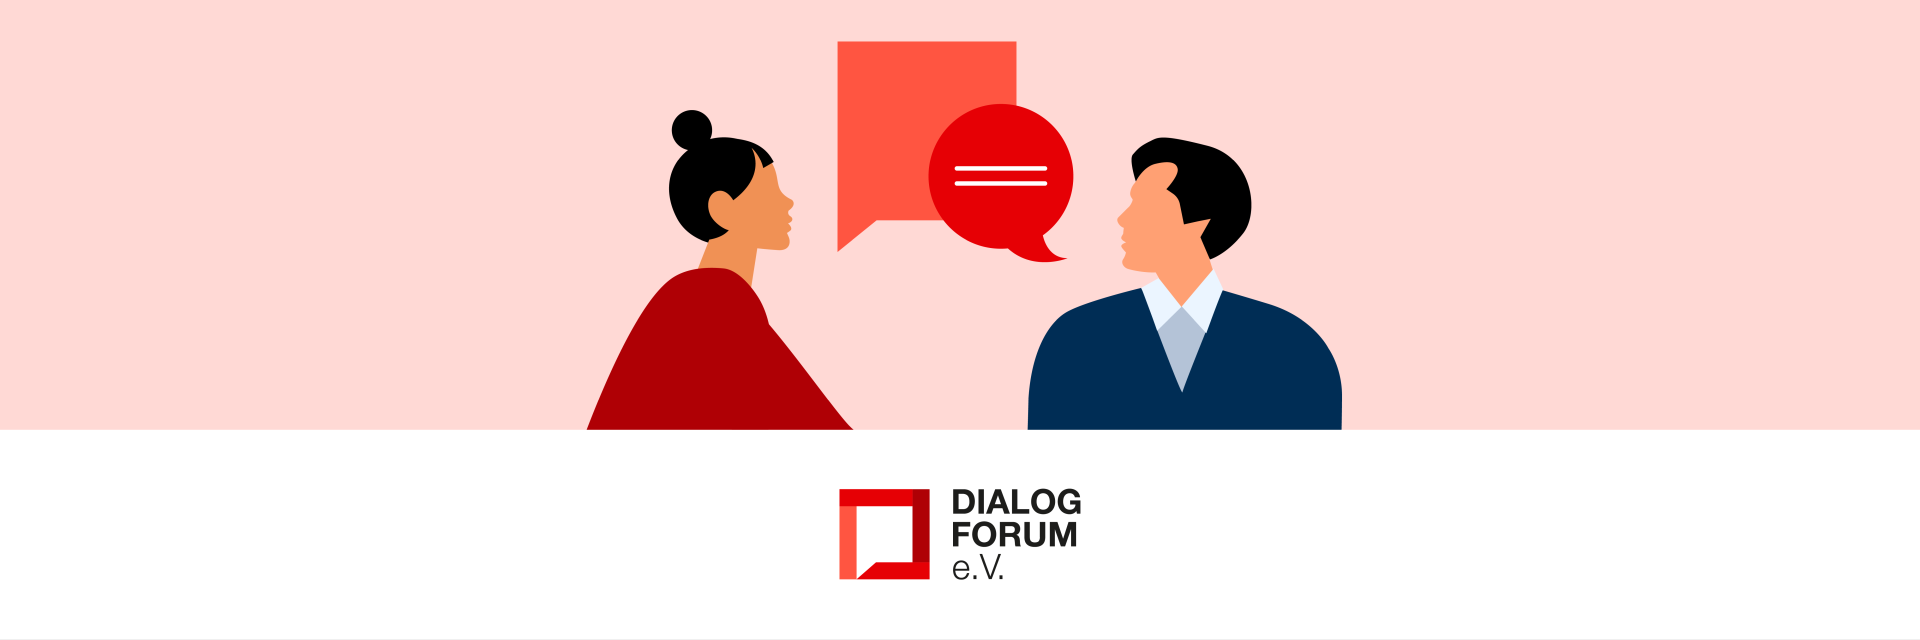 Dialogforum des DRK: Personen im Dialog